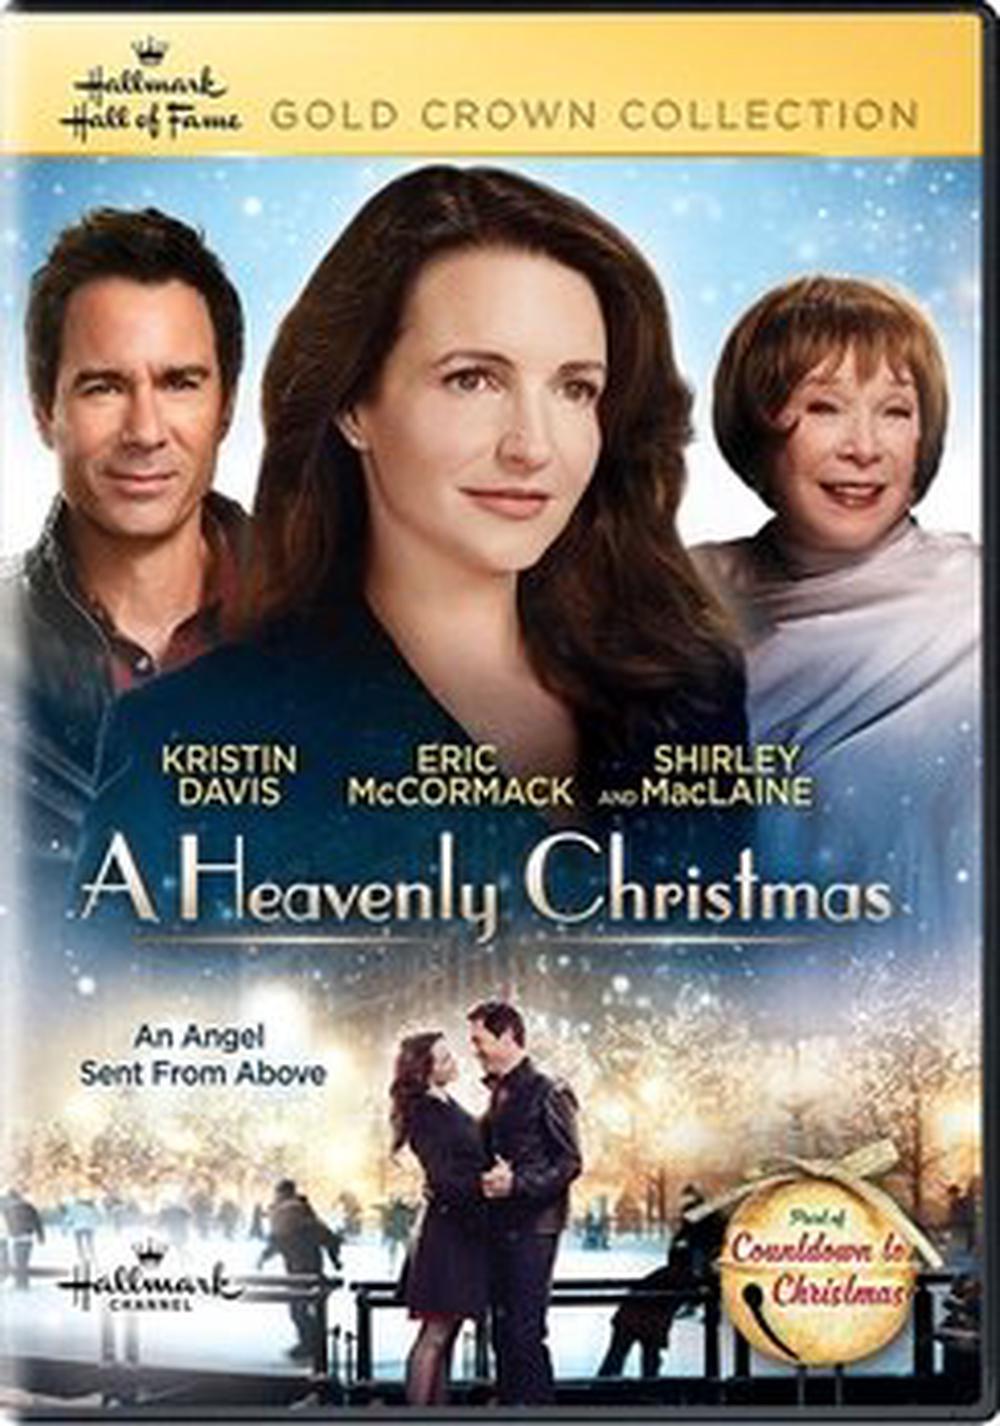 Heavenly Christmas - DVD Region 1 Free Shipping! 767685154779 | eBay